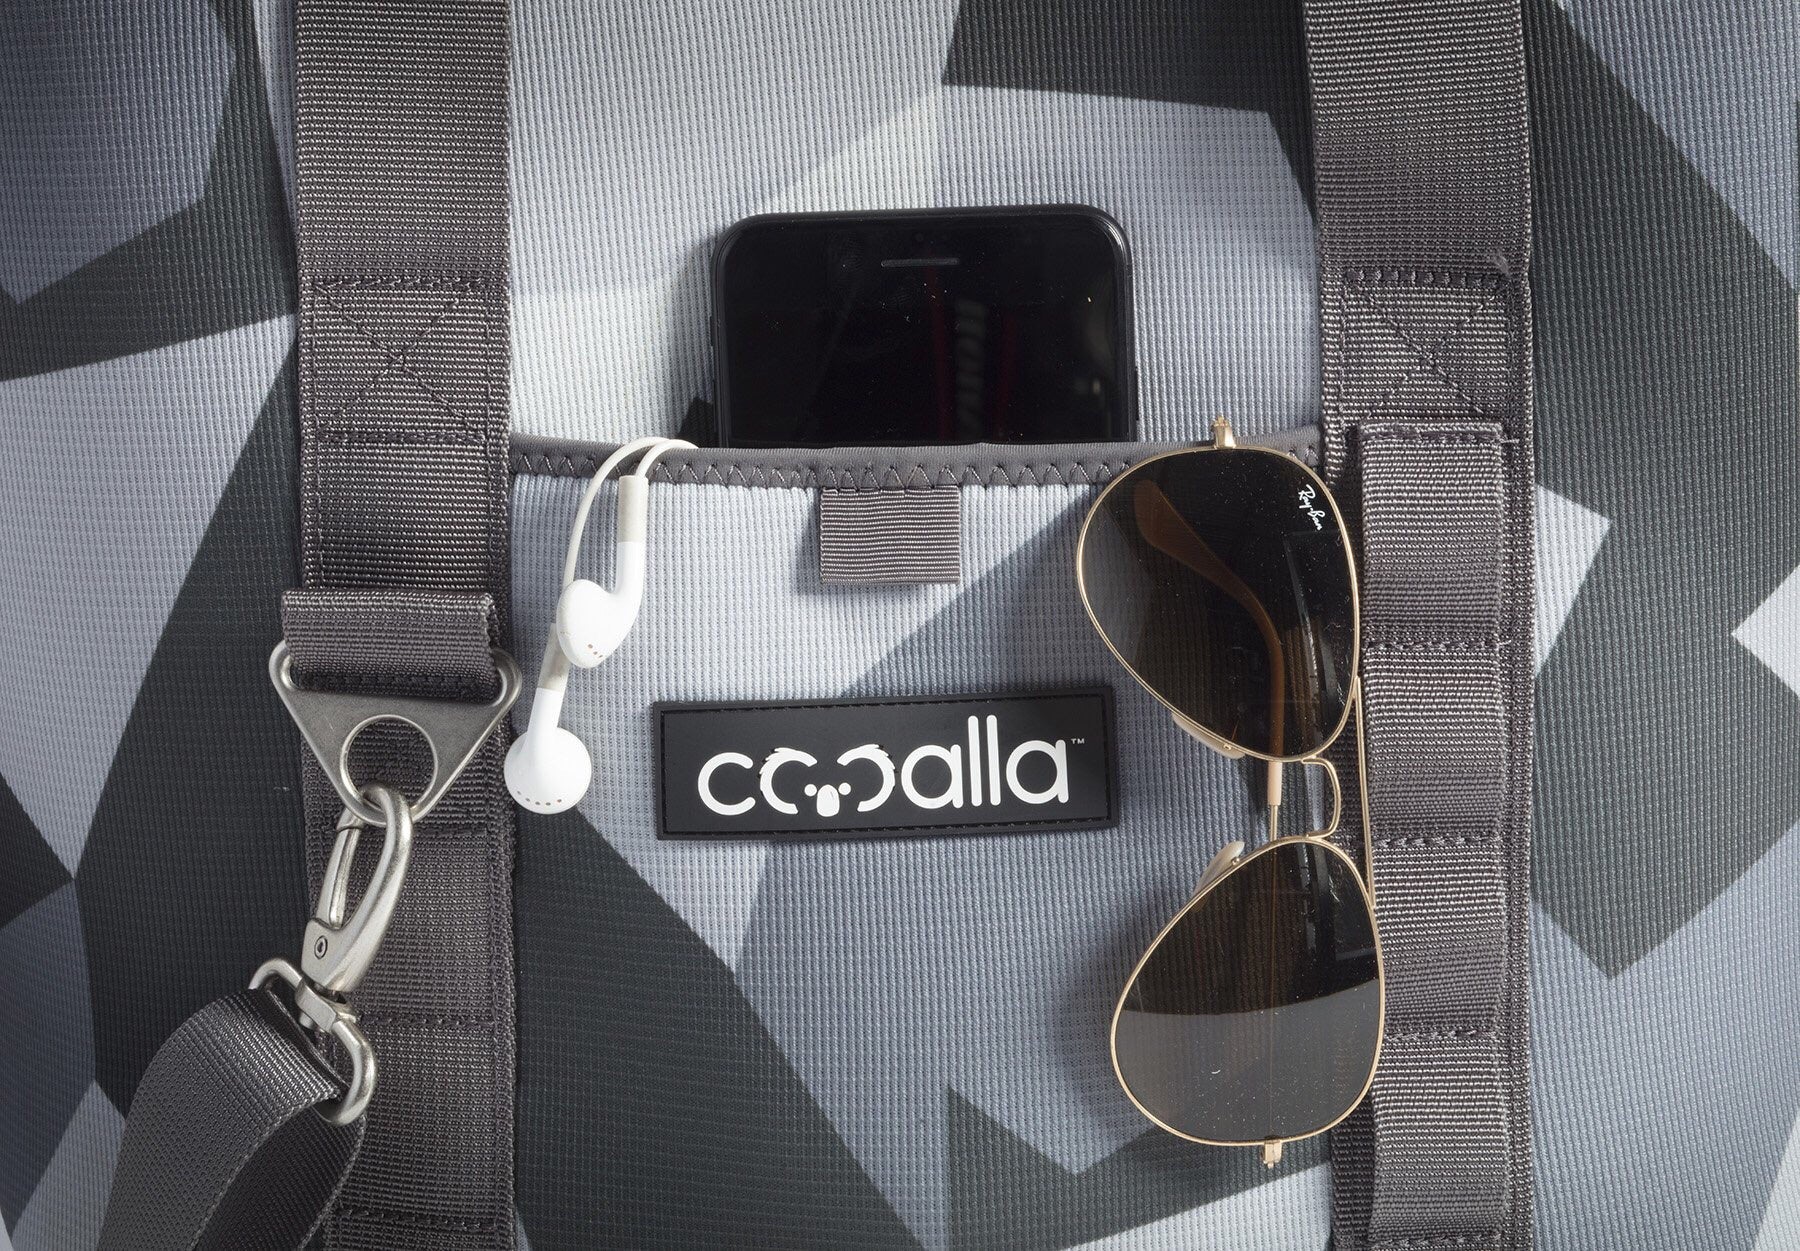 Cooalla Cooler: Portable Cooler Bag - Sportsman Gear